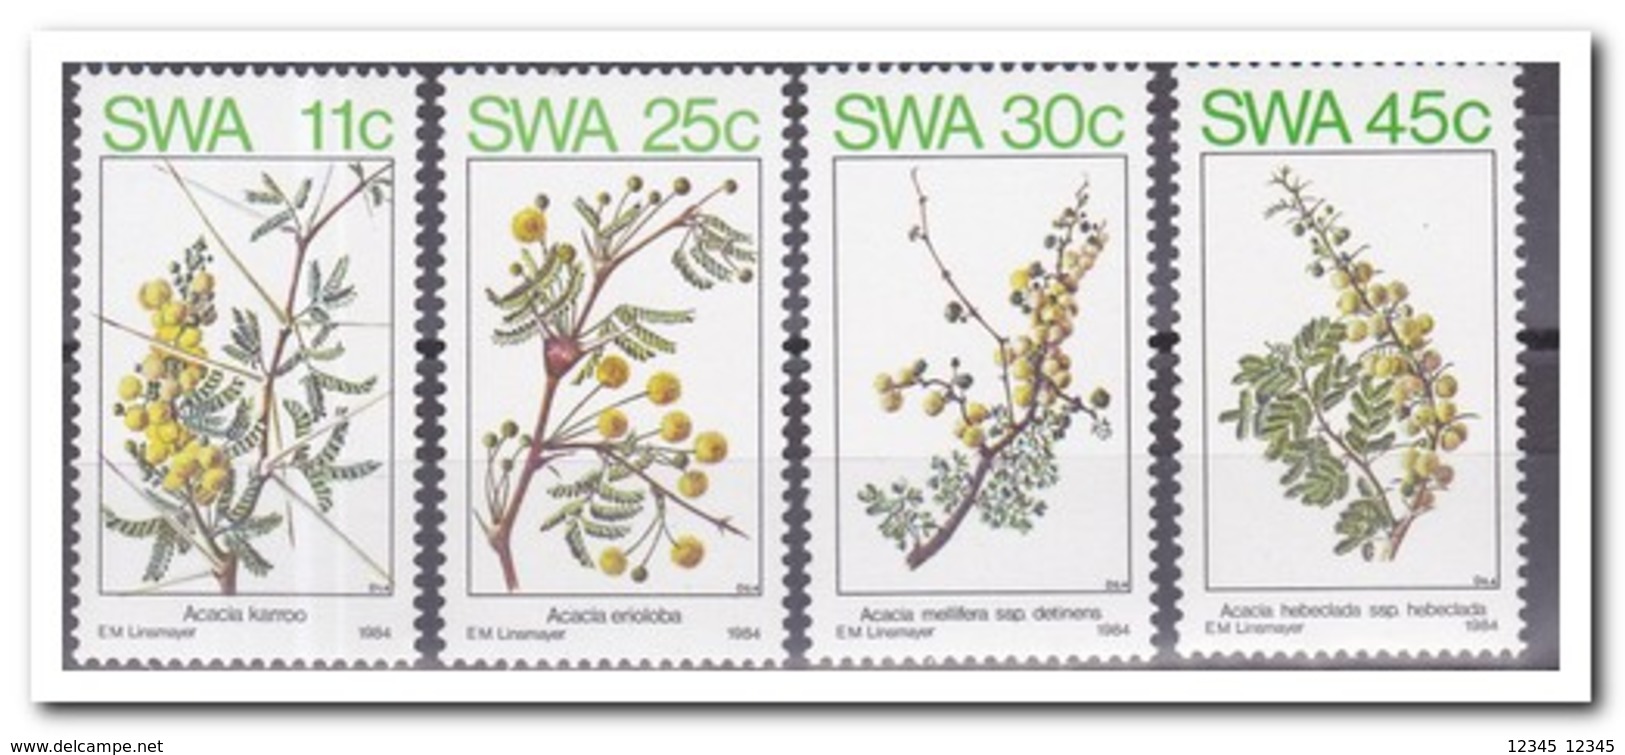 SWA Zuid West Afrika 1984, Postfris MNH, Plants - Altri - Africa